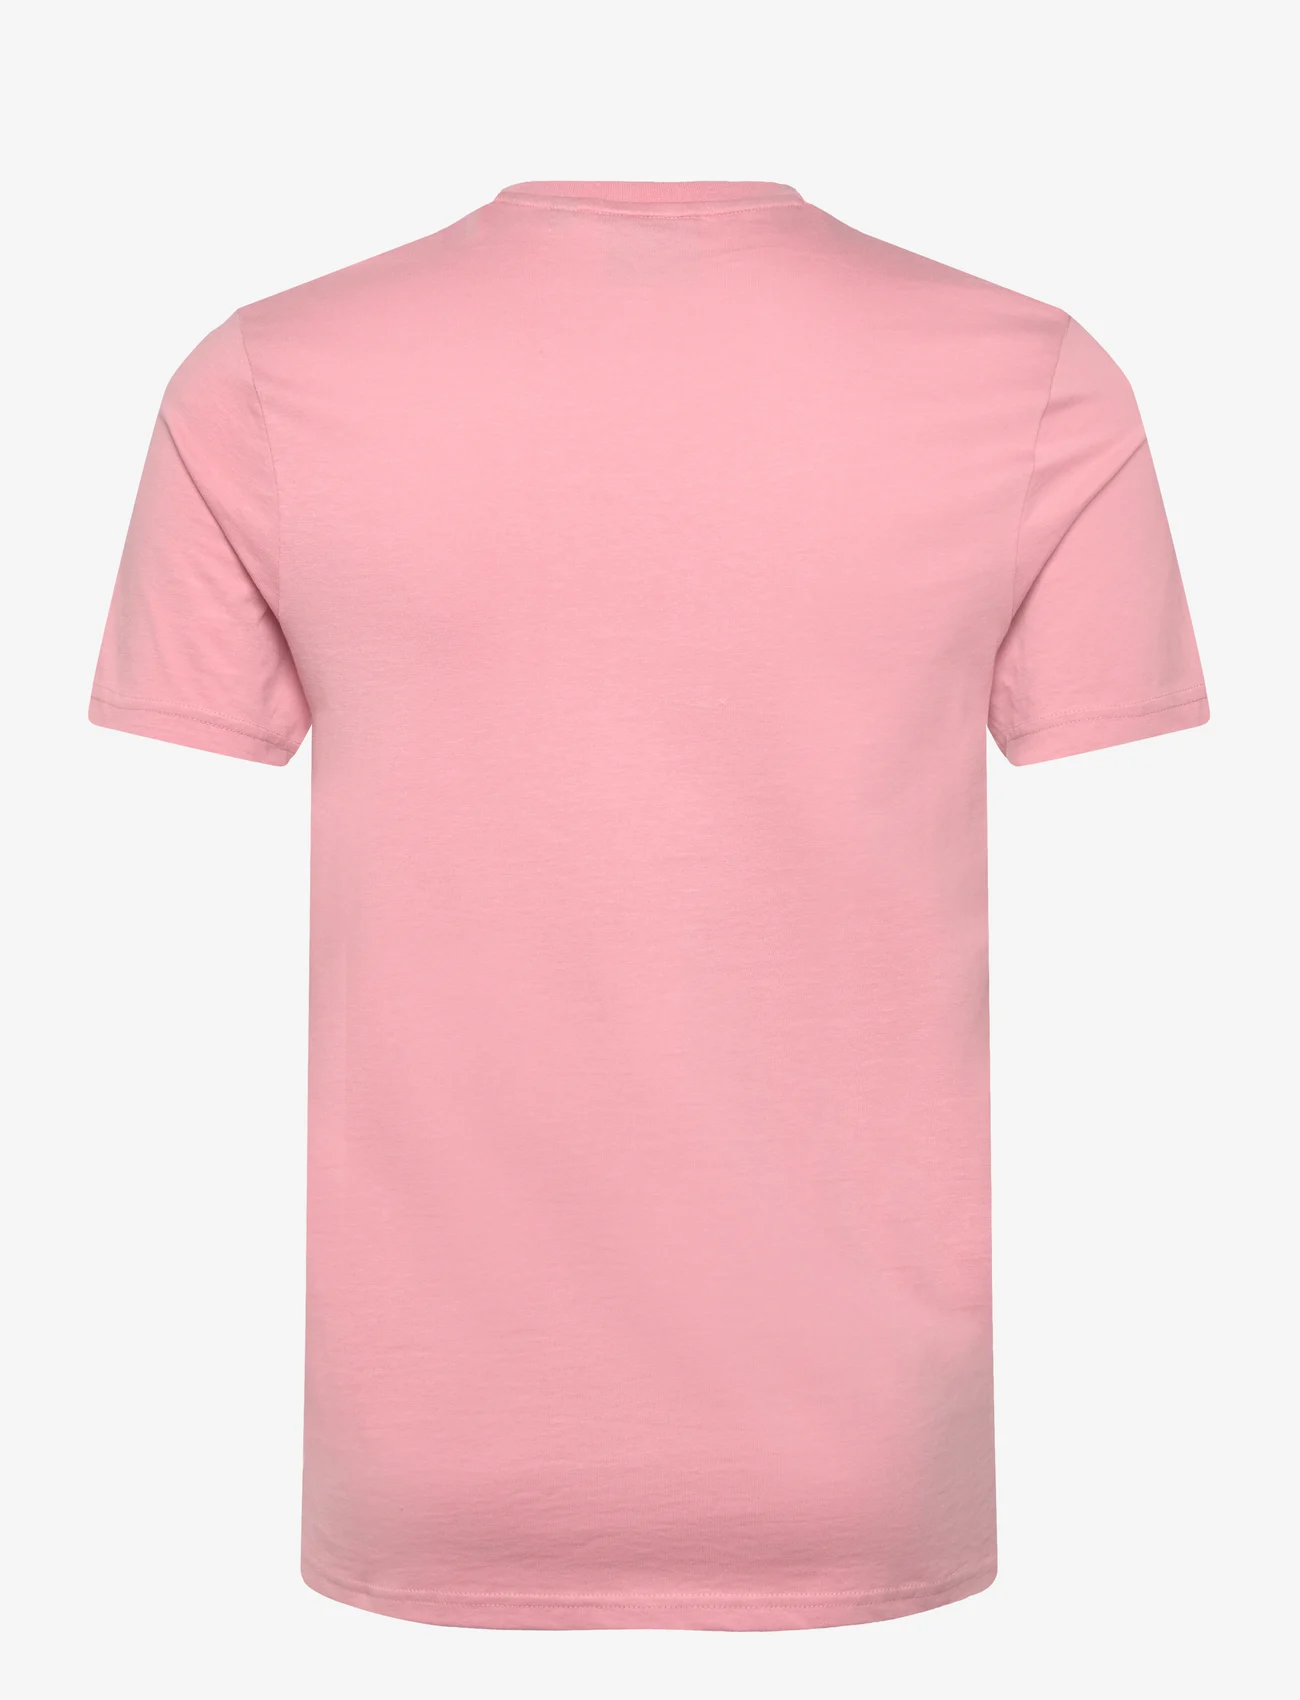 Lyle & Scott - Pocket T-Shirt - laagste prijzen - x238 palm pink - 1